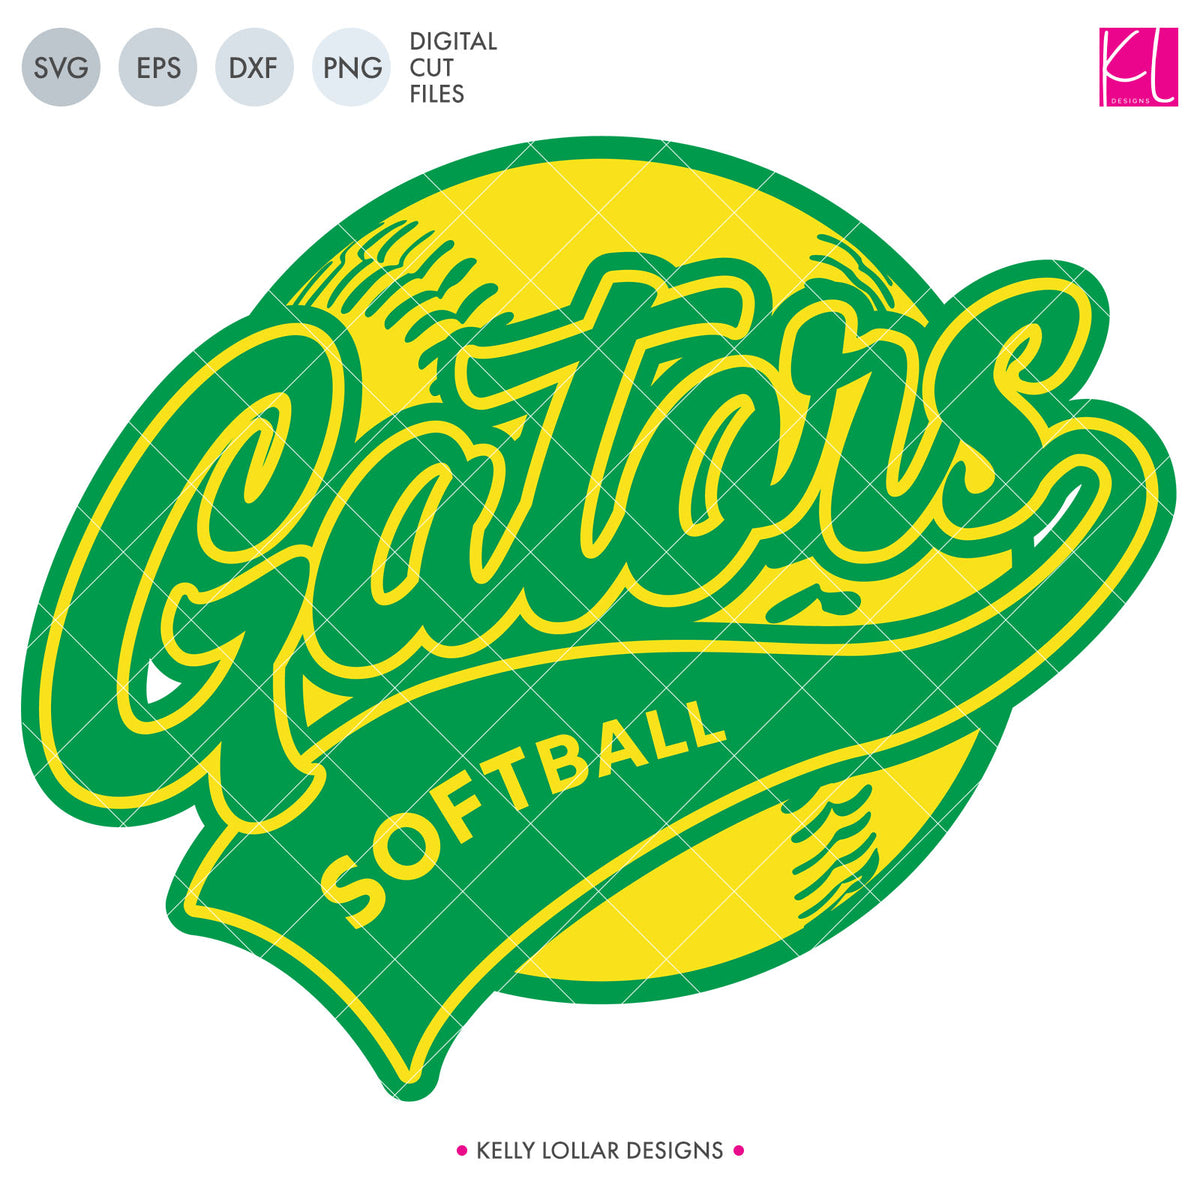 Gators Baseball &amp; Softball Bundle | SVG DXF EPS PNG Cut Files